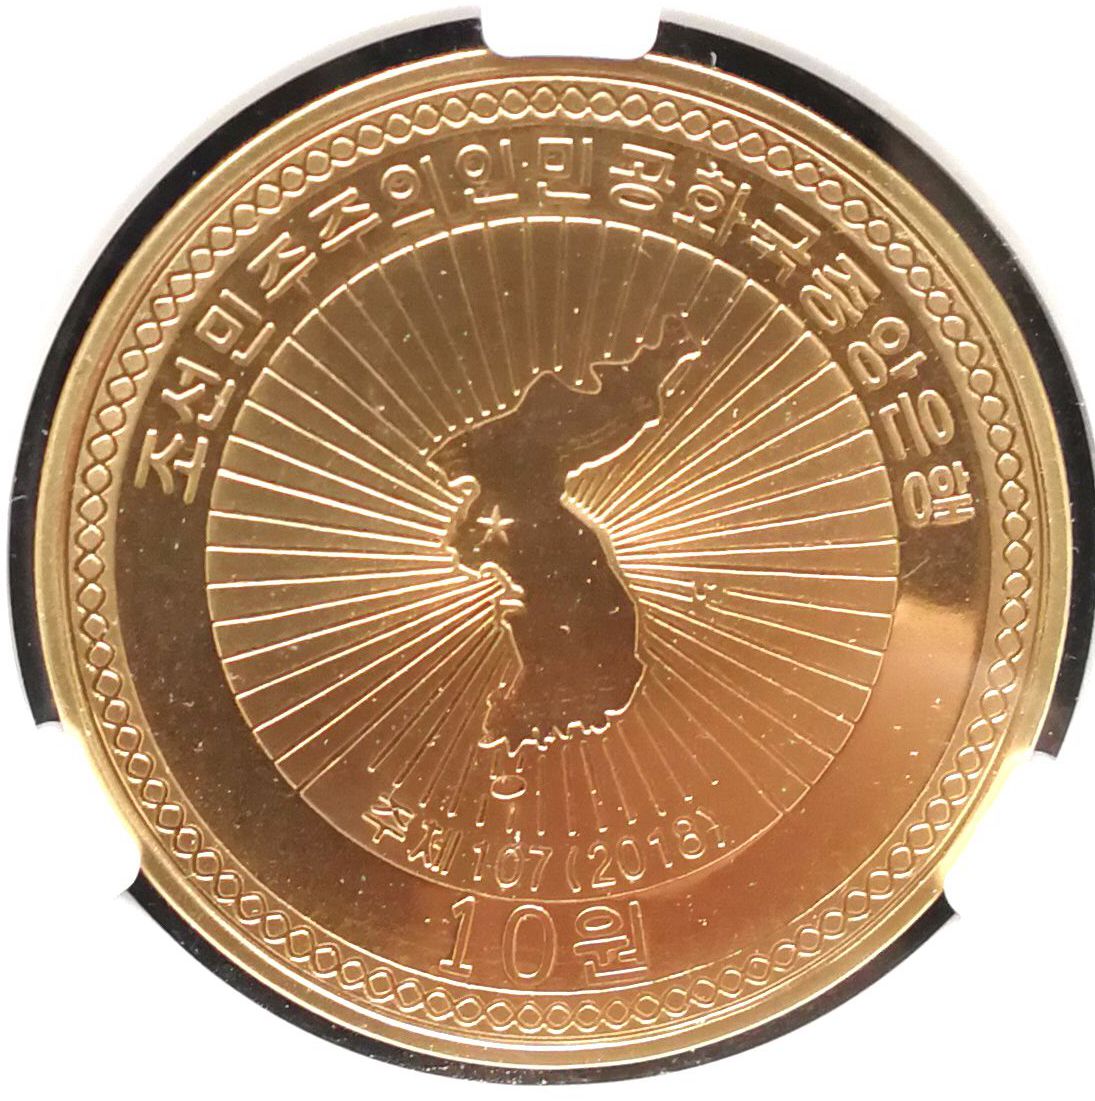 L3371, Korea Proof Bronze Coin, "70th Anniv. April Conference" 2018 Korean Map